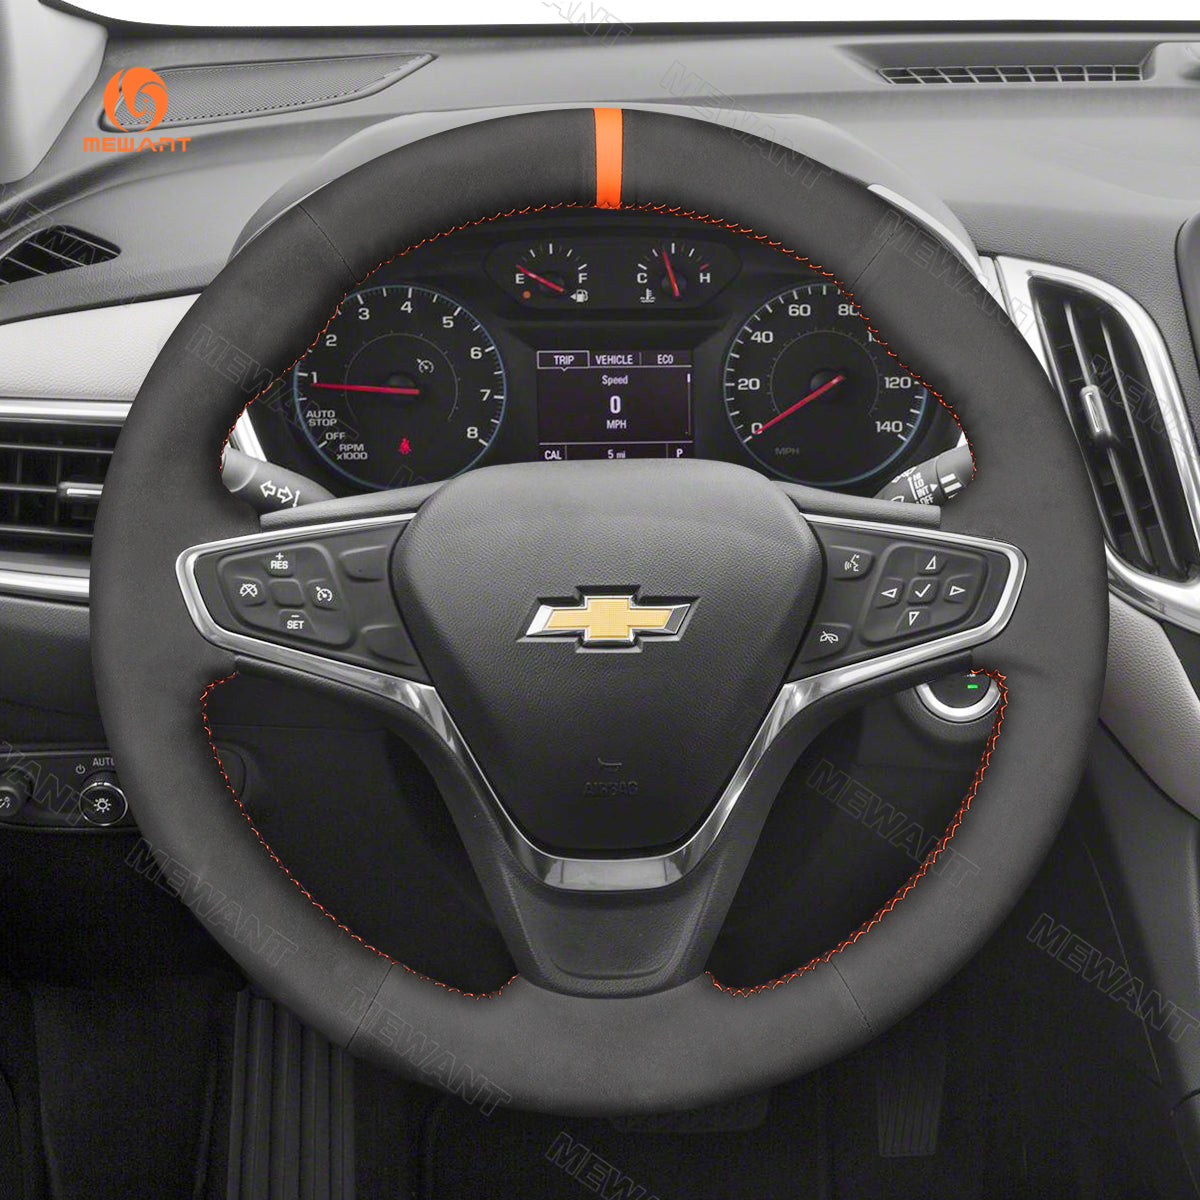 MEWANT Hand Stitch Car Steering Wheel Cover for Chevrolet Malibu Equinox Opel Ampera-e